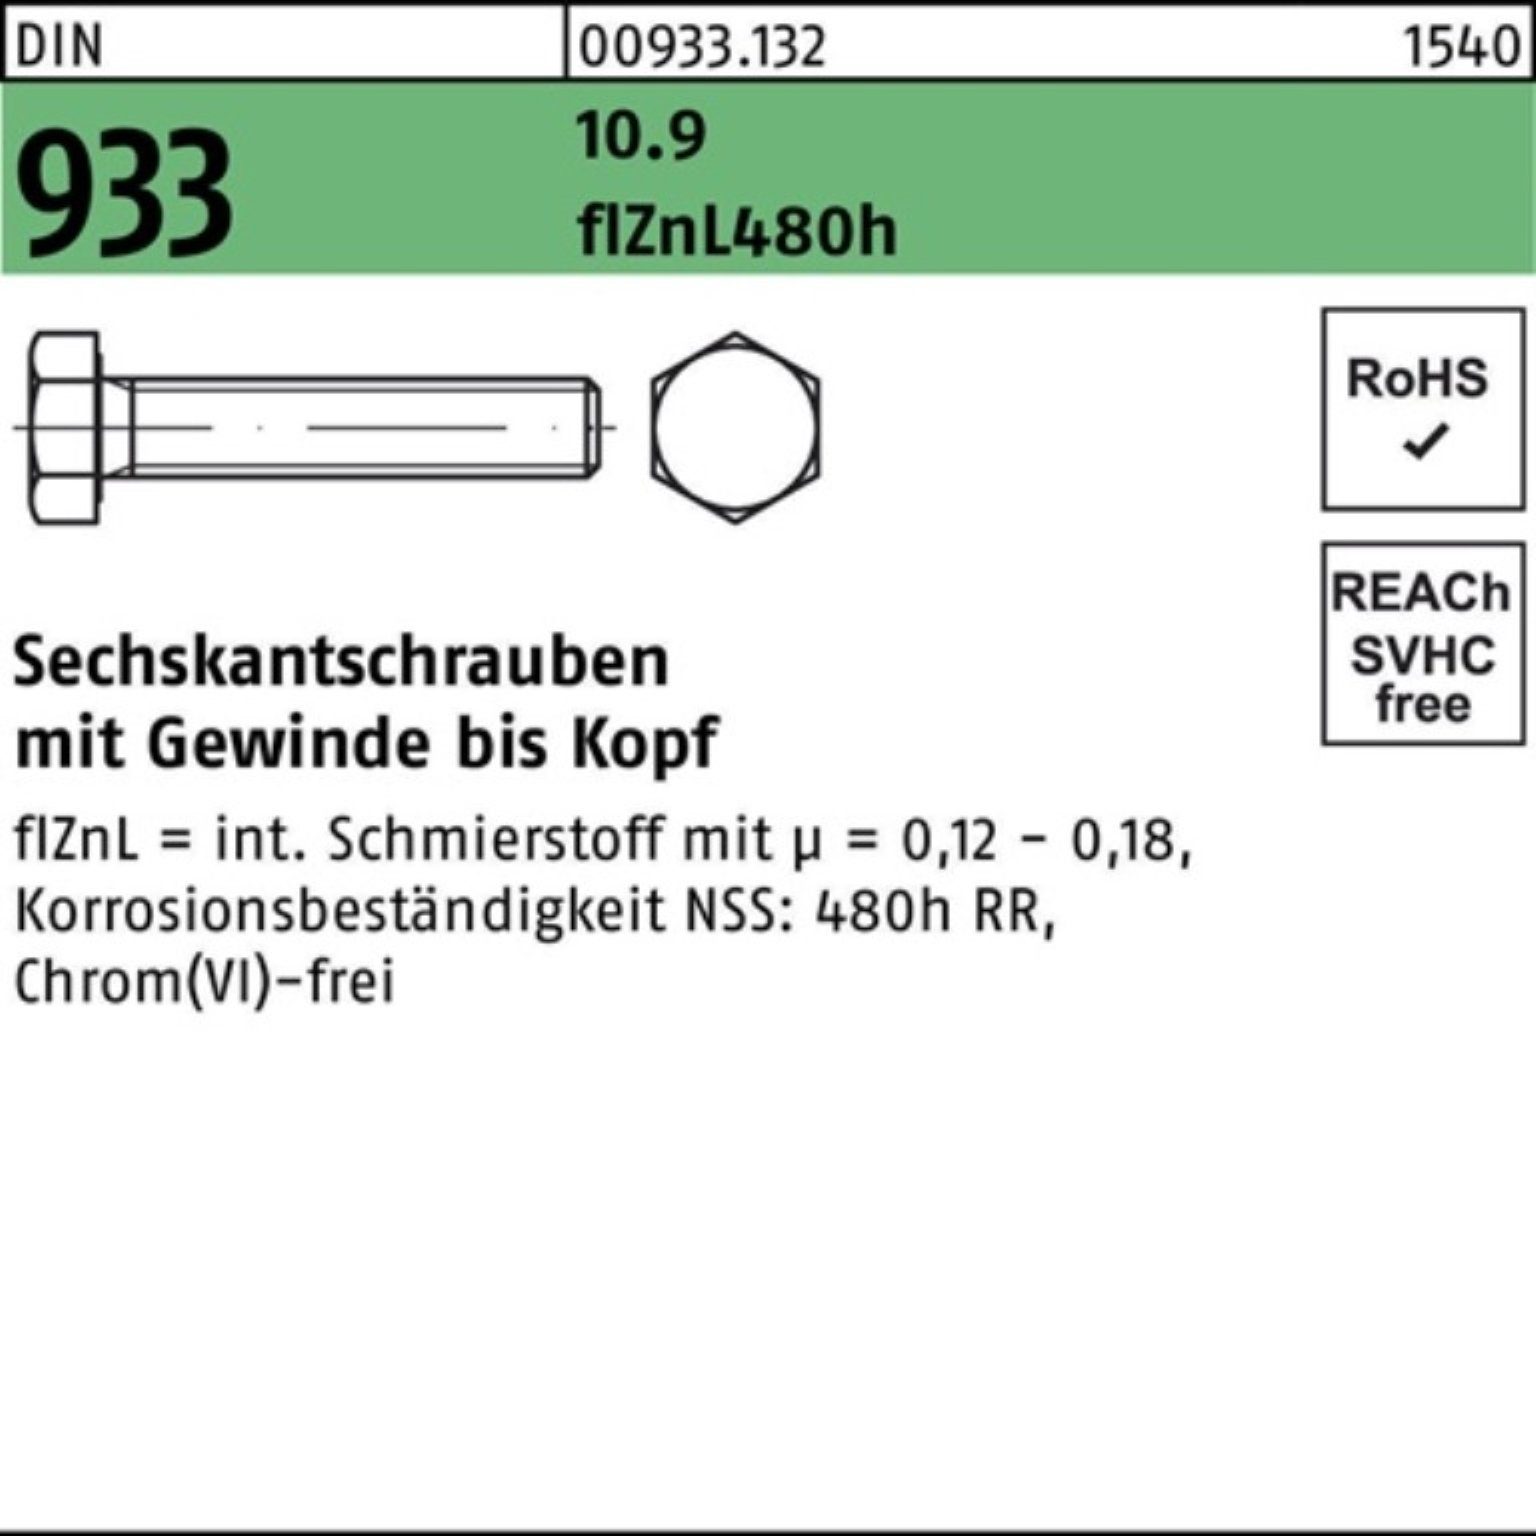 Reyher Sechskantschraube 200er Pack Sechskantschraube DIN 933 VG M8x 35 10.9 flZnL/nc/x/x/480h